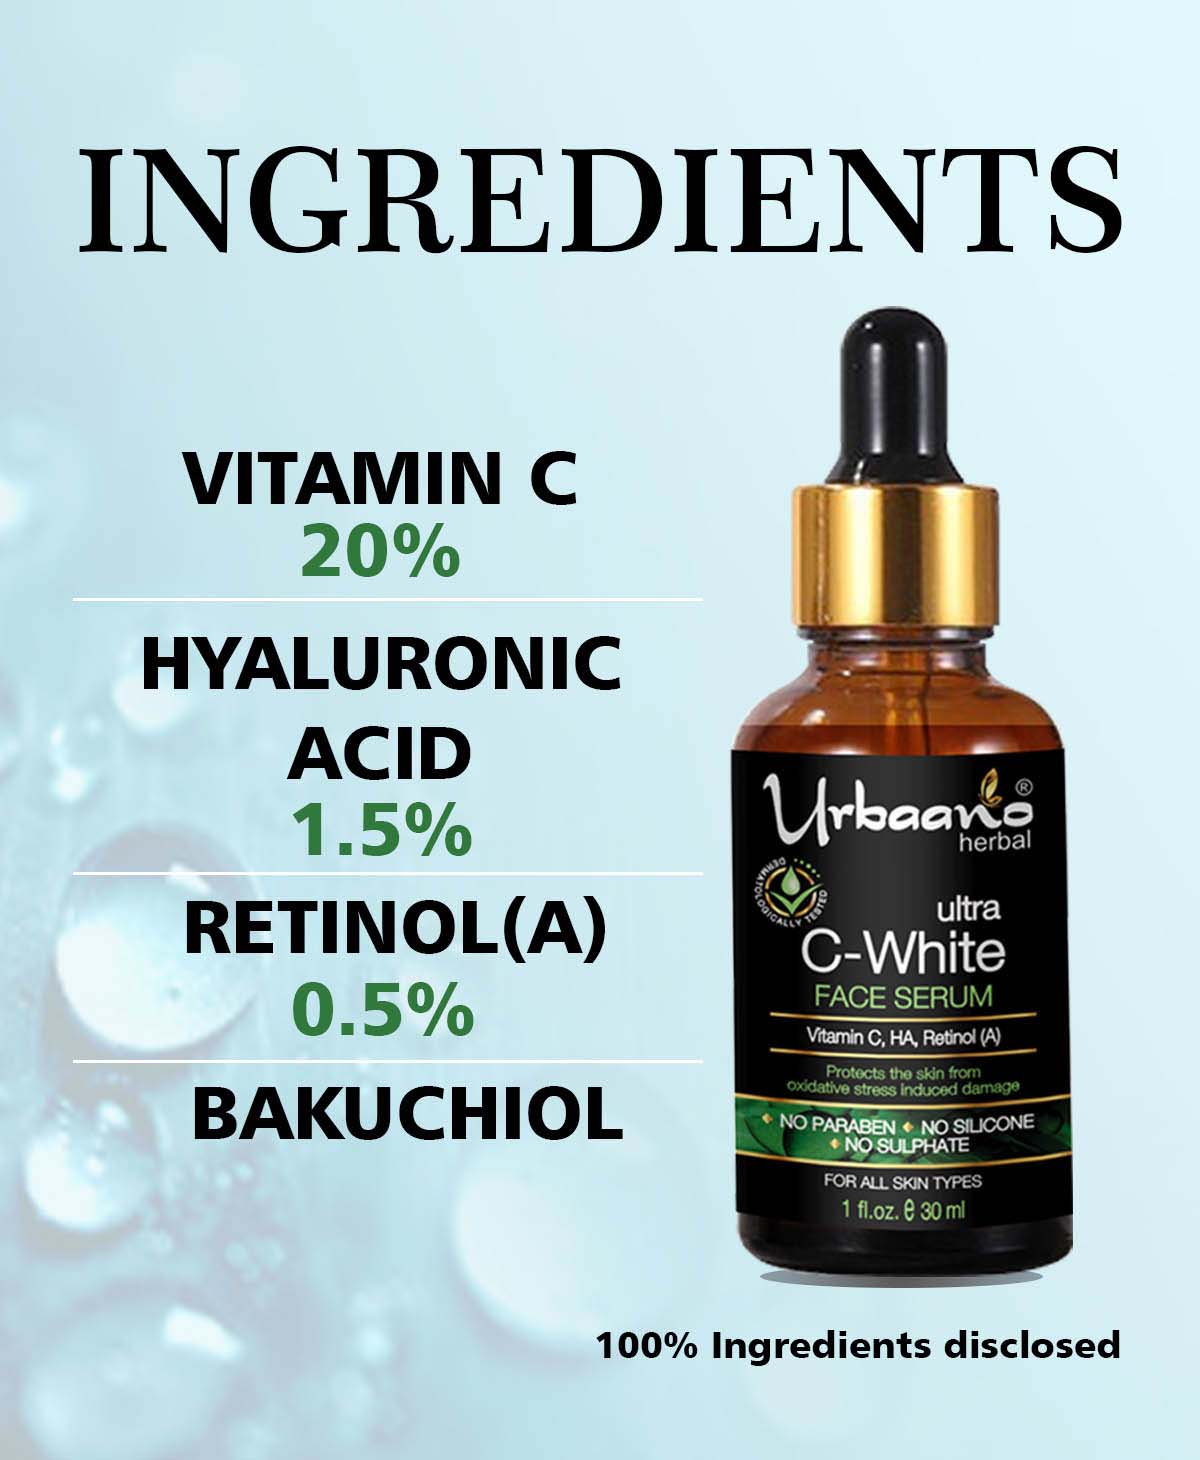 urbaano herbal vitamin c face serum with hyaluronic acid, retinol, bakuchiol for bright, firm nourished skin 